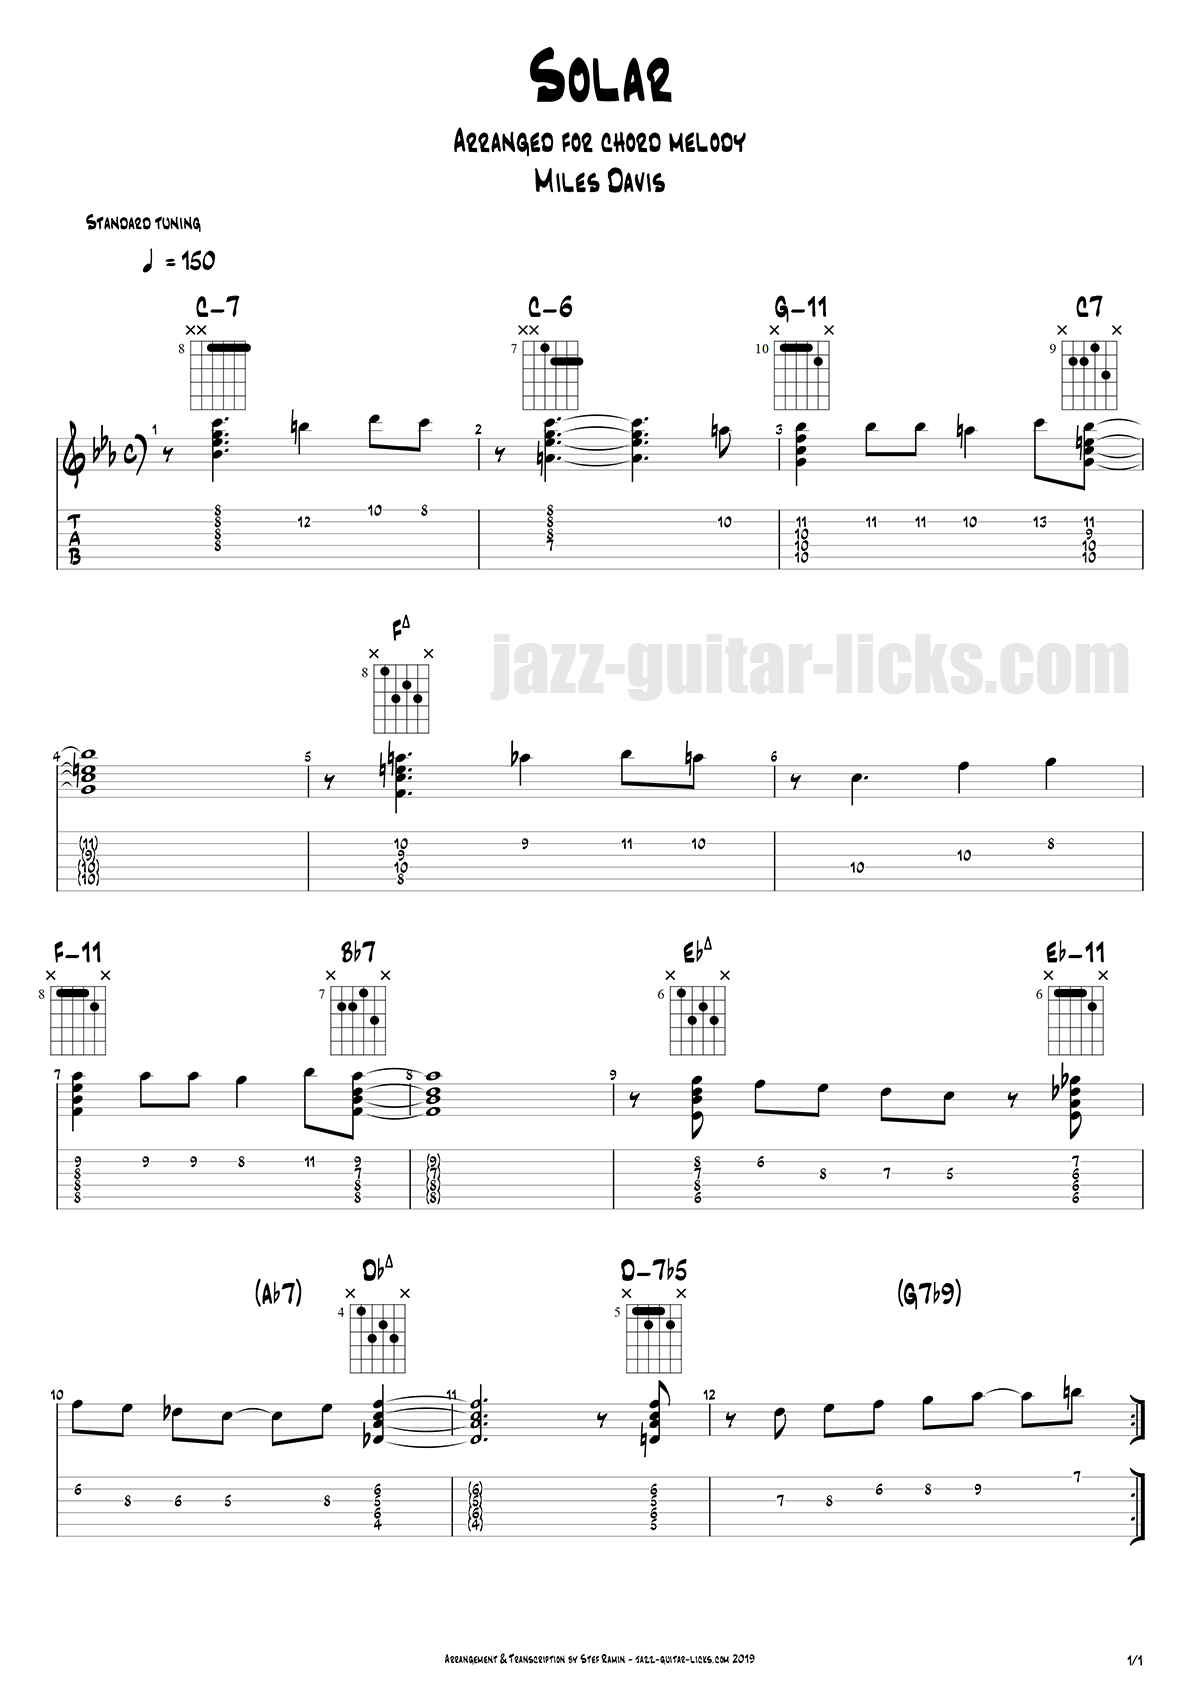 download buku gitar melodi pdf file